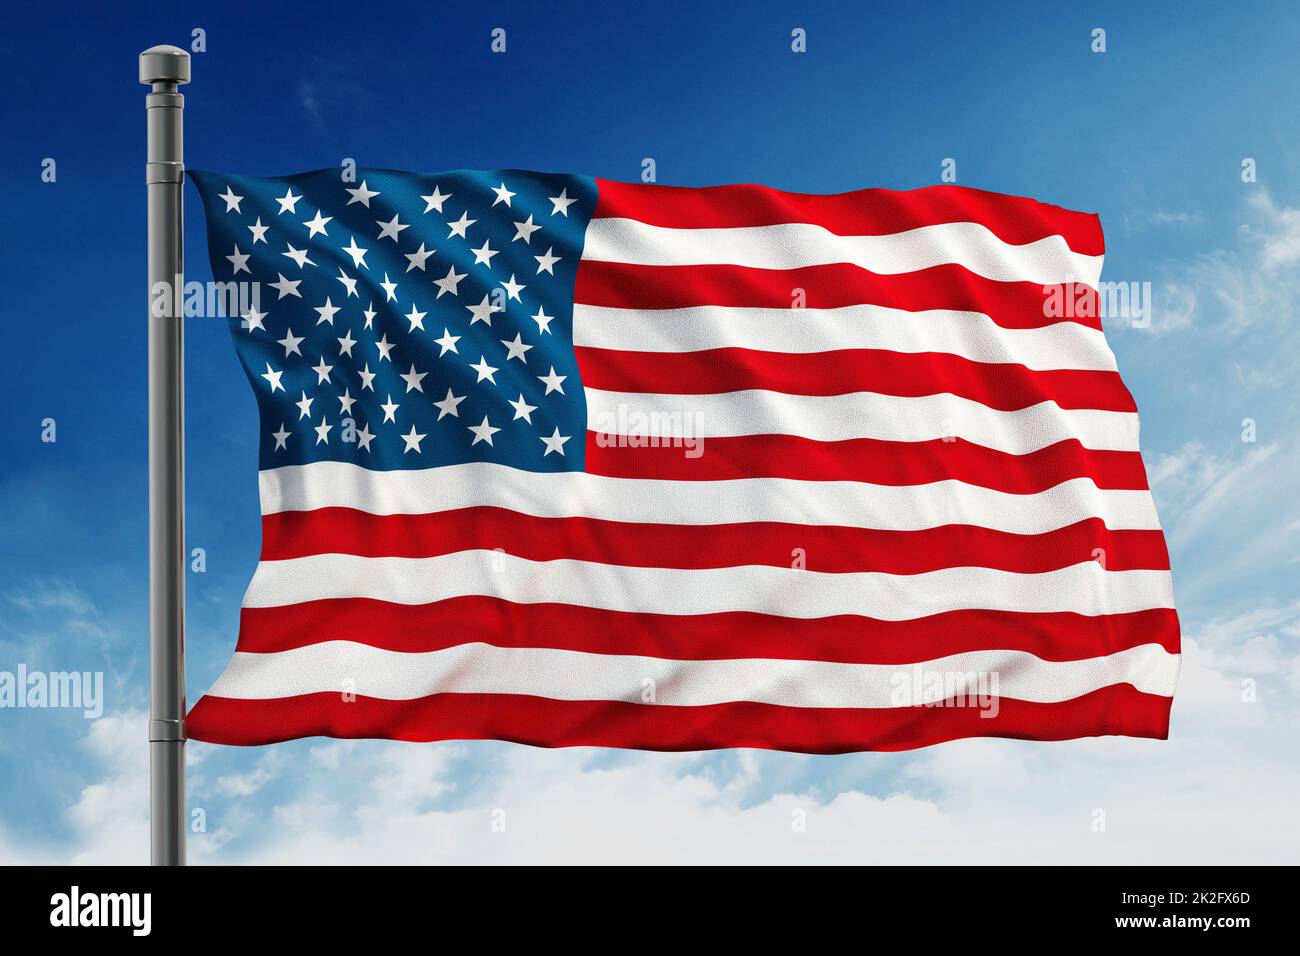 United States of America flag. 3d illustration of waving flag of USA Stock  Photo - Alamy